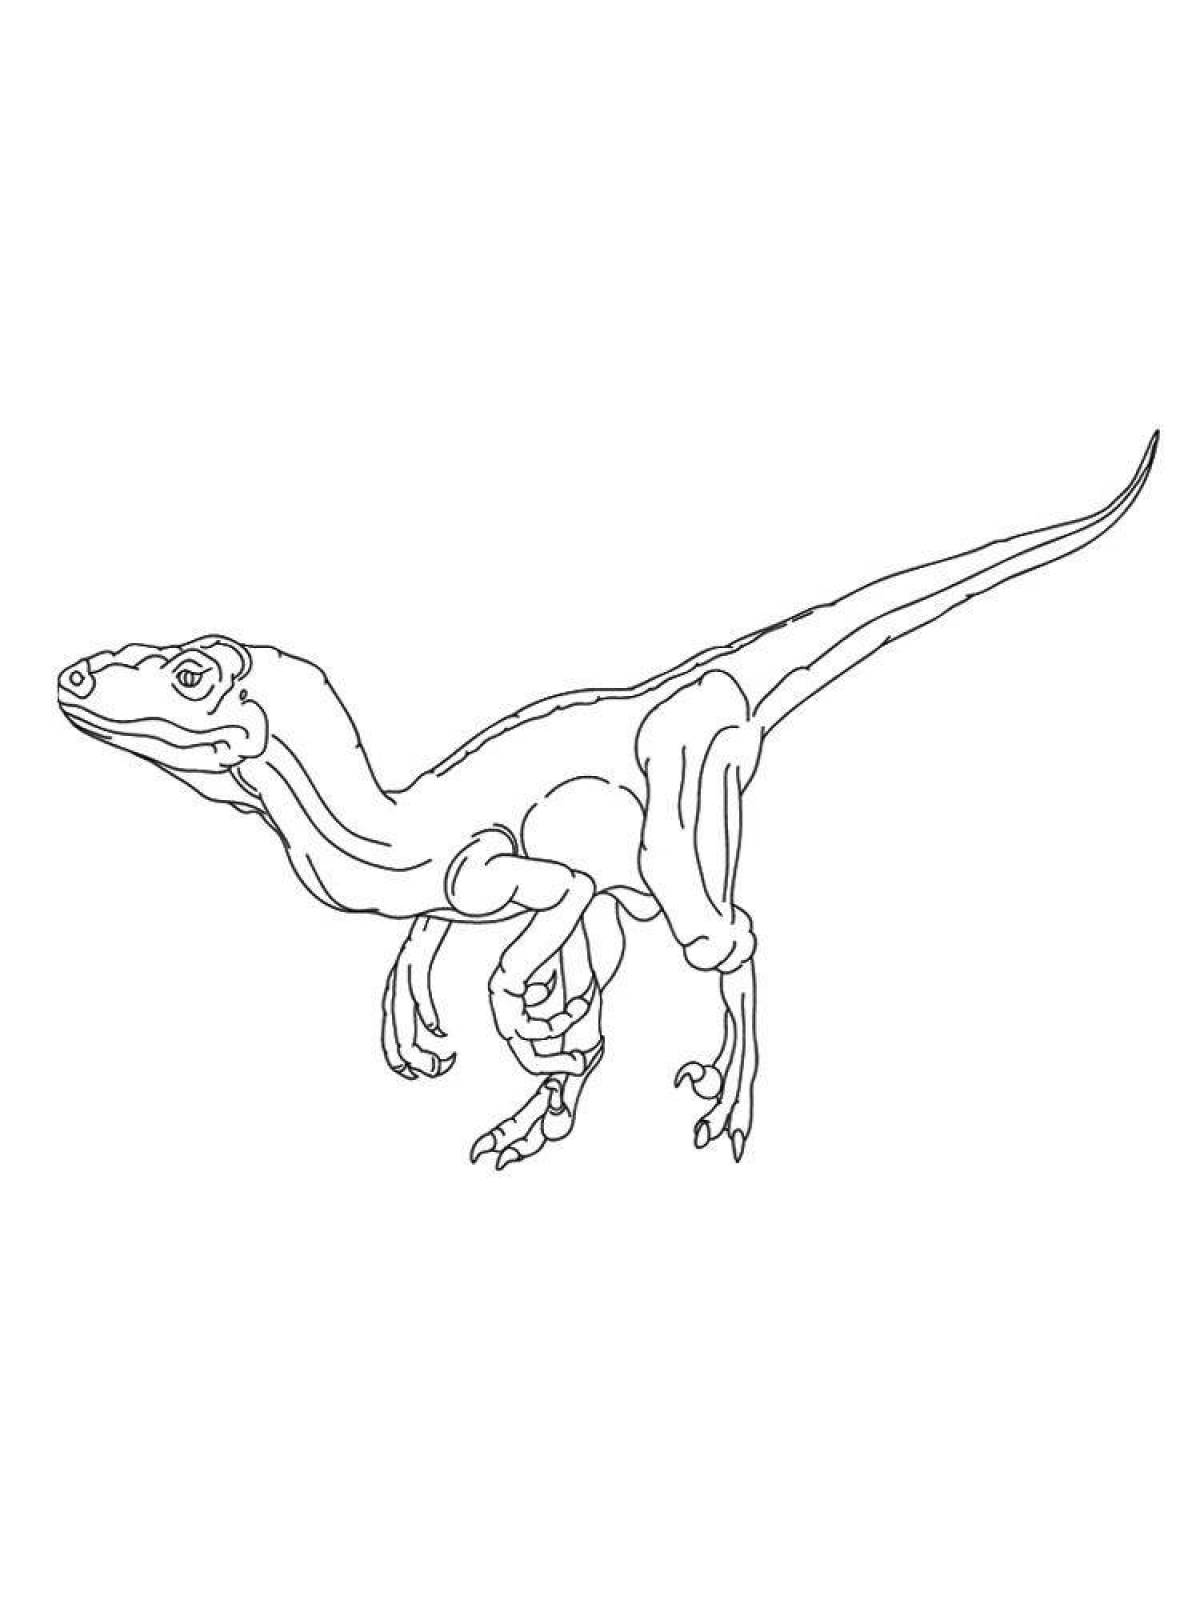 Coloring page happy velociraptor